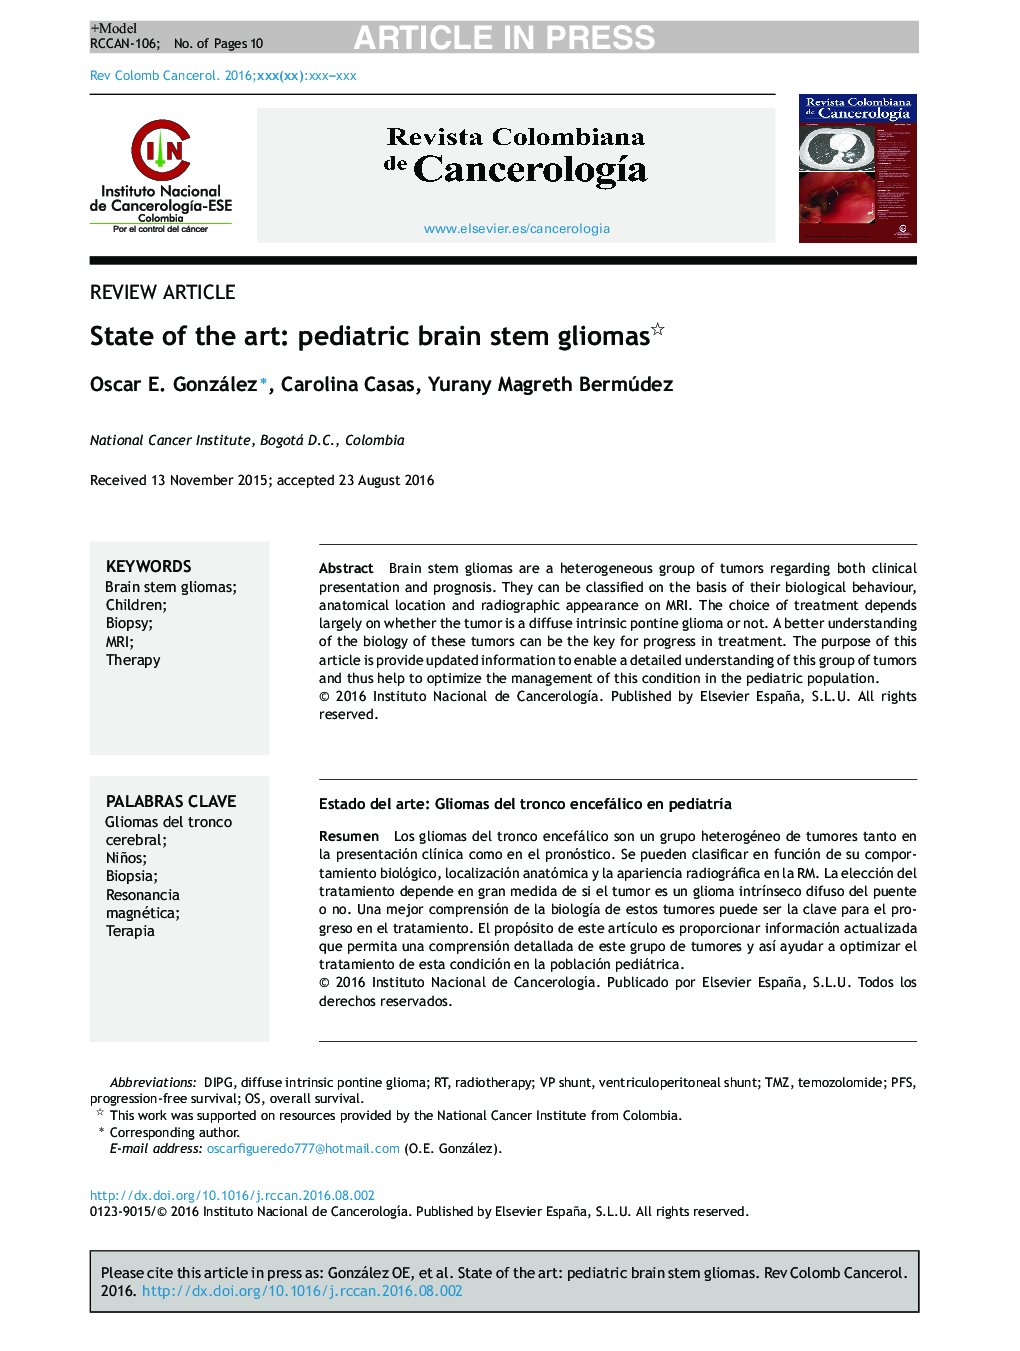 State of the art: pediatric brain stem gliomas